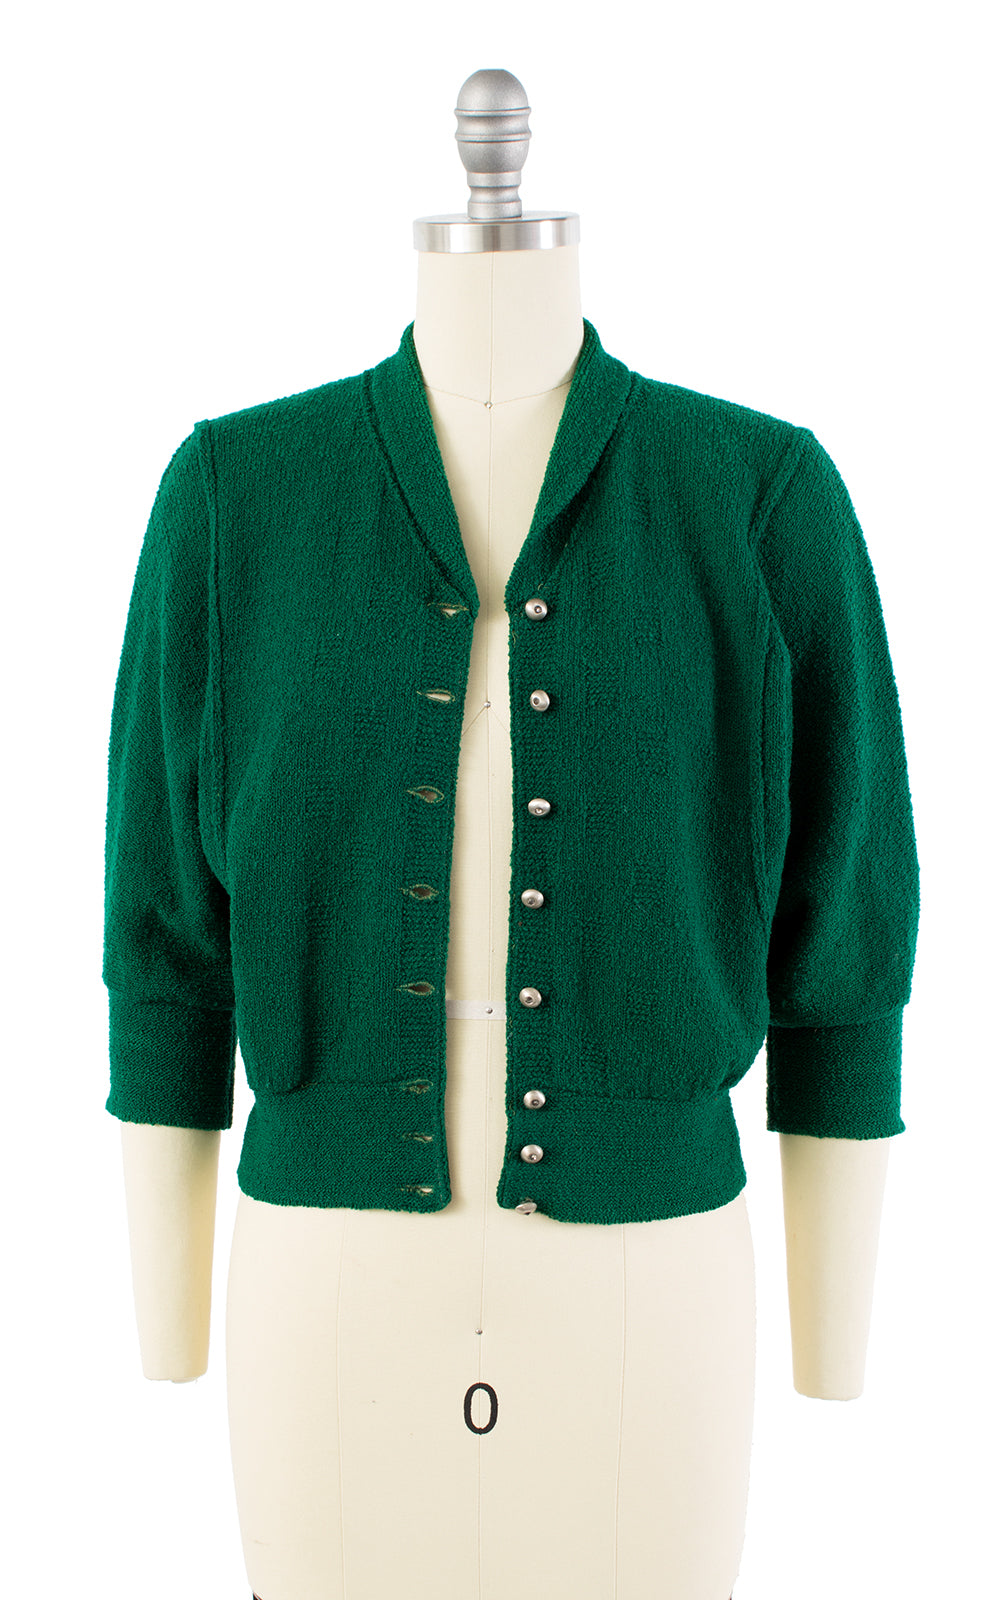 1950s Forest Green Knit Wool Cardigan | small/medium